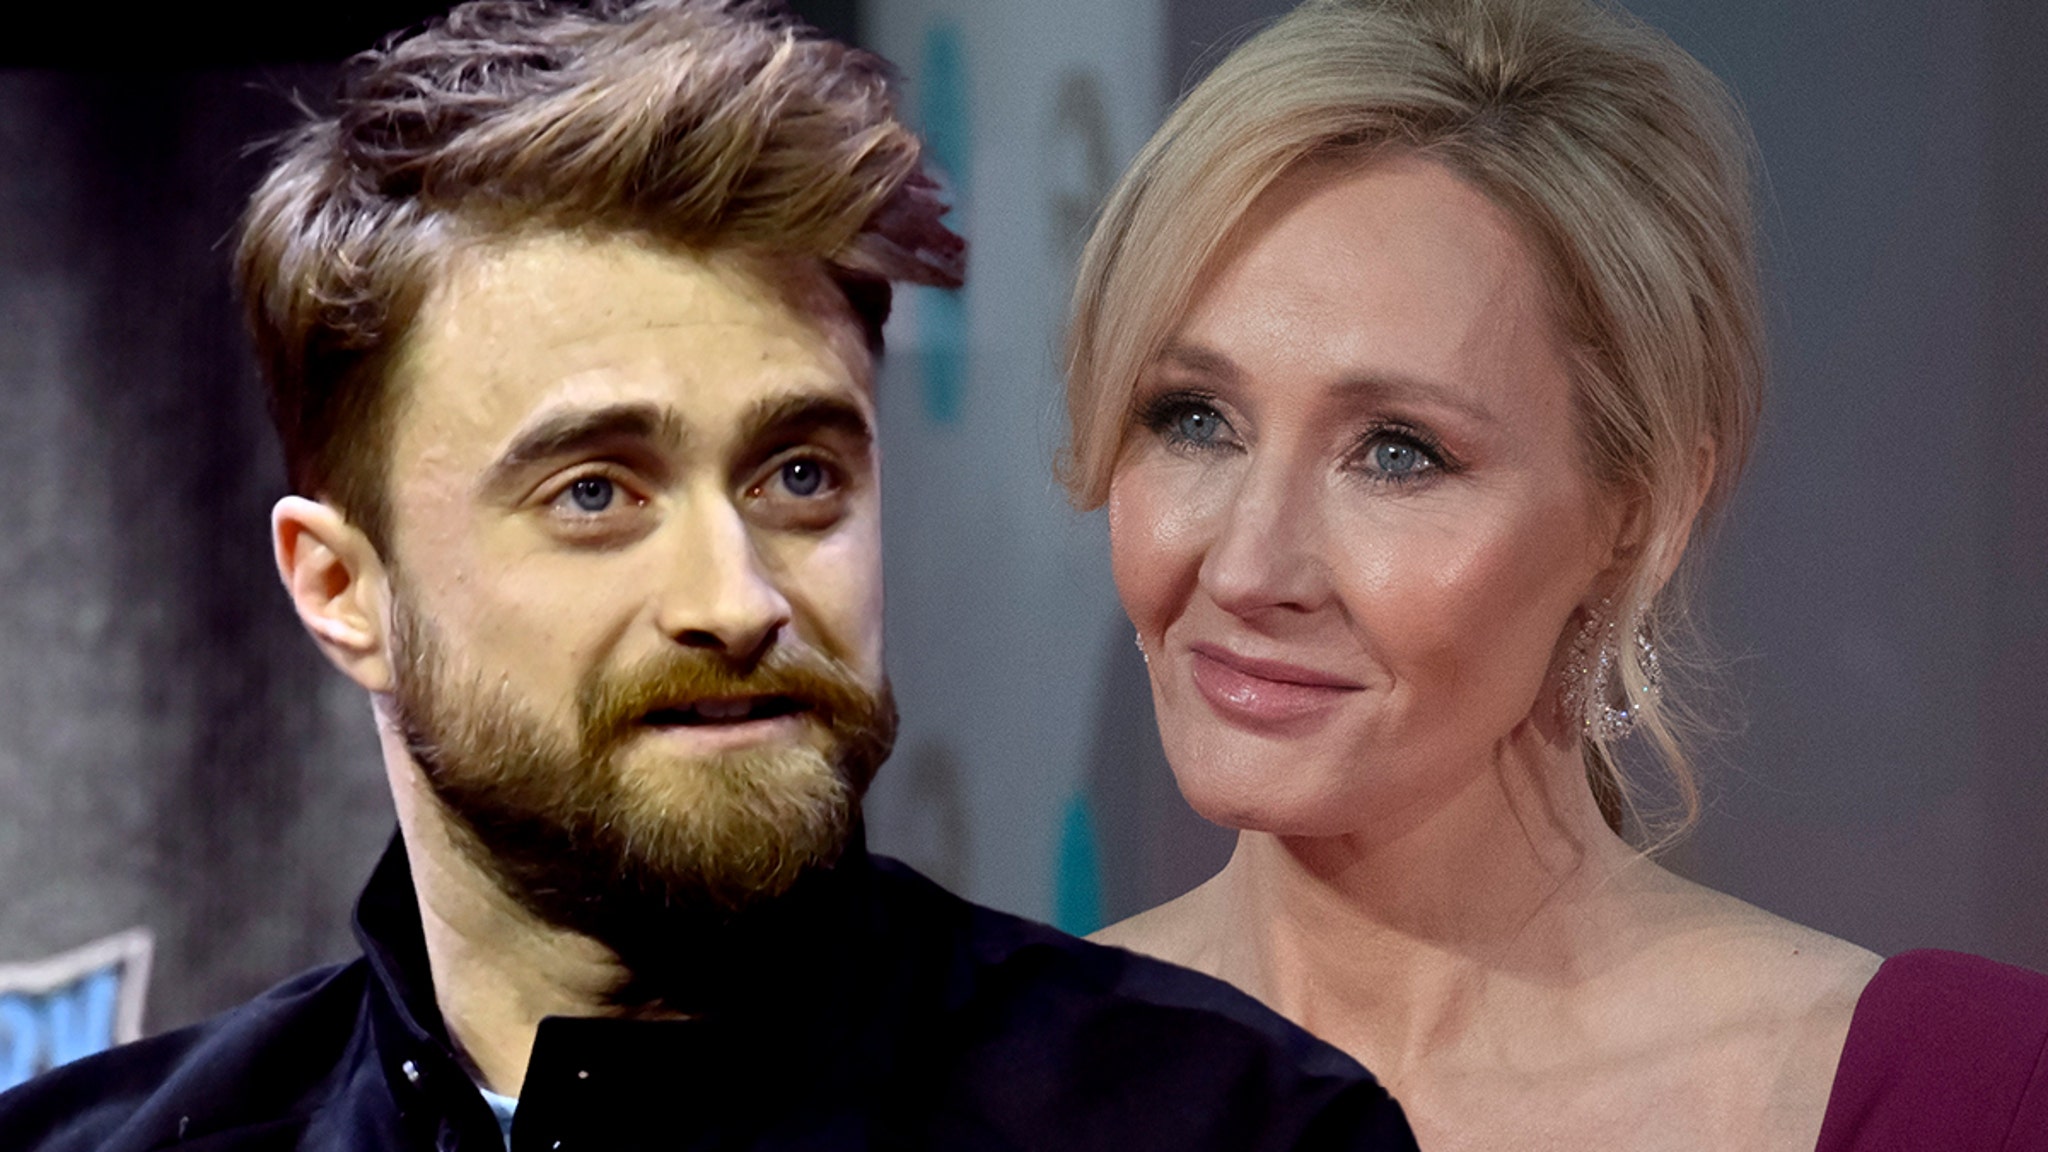 Daniel Radcliffe Responds to J.K. Rowling's Latest Transgender Dust-Up